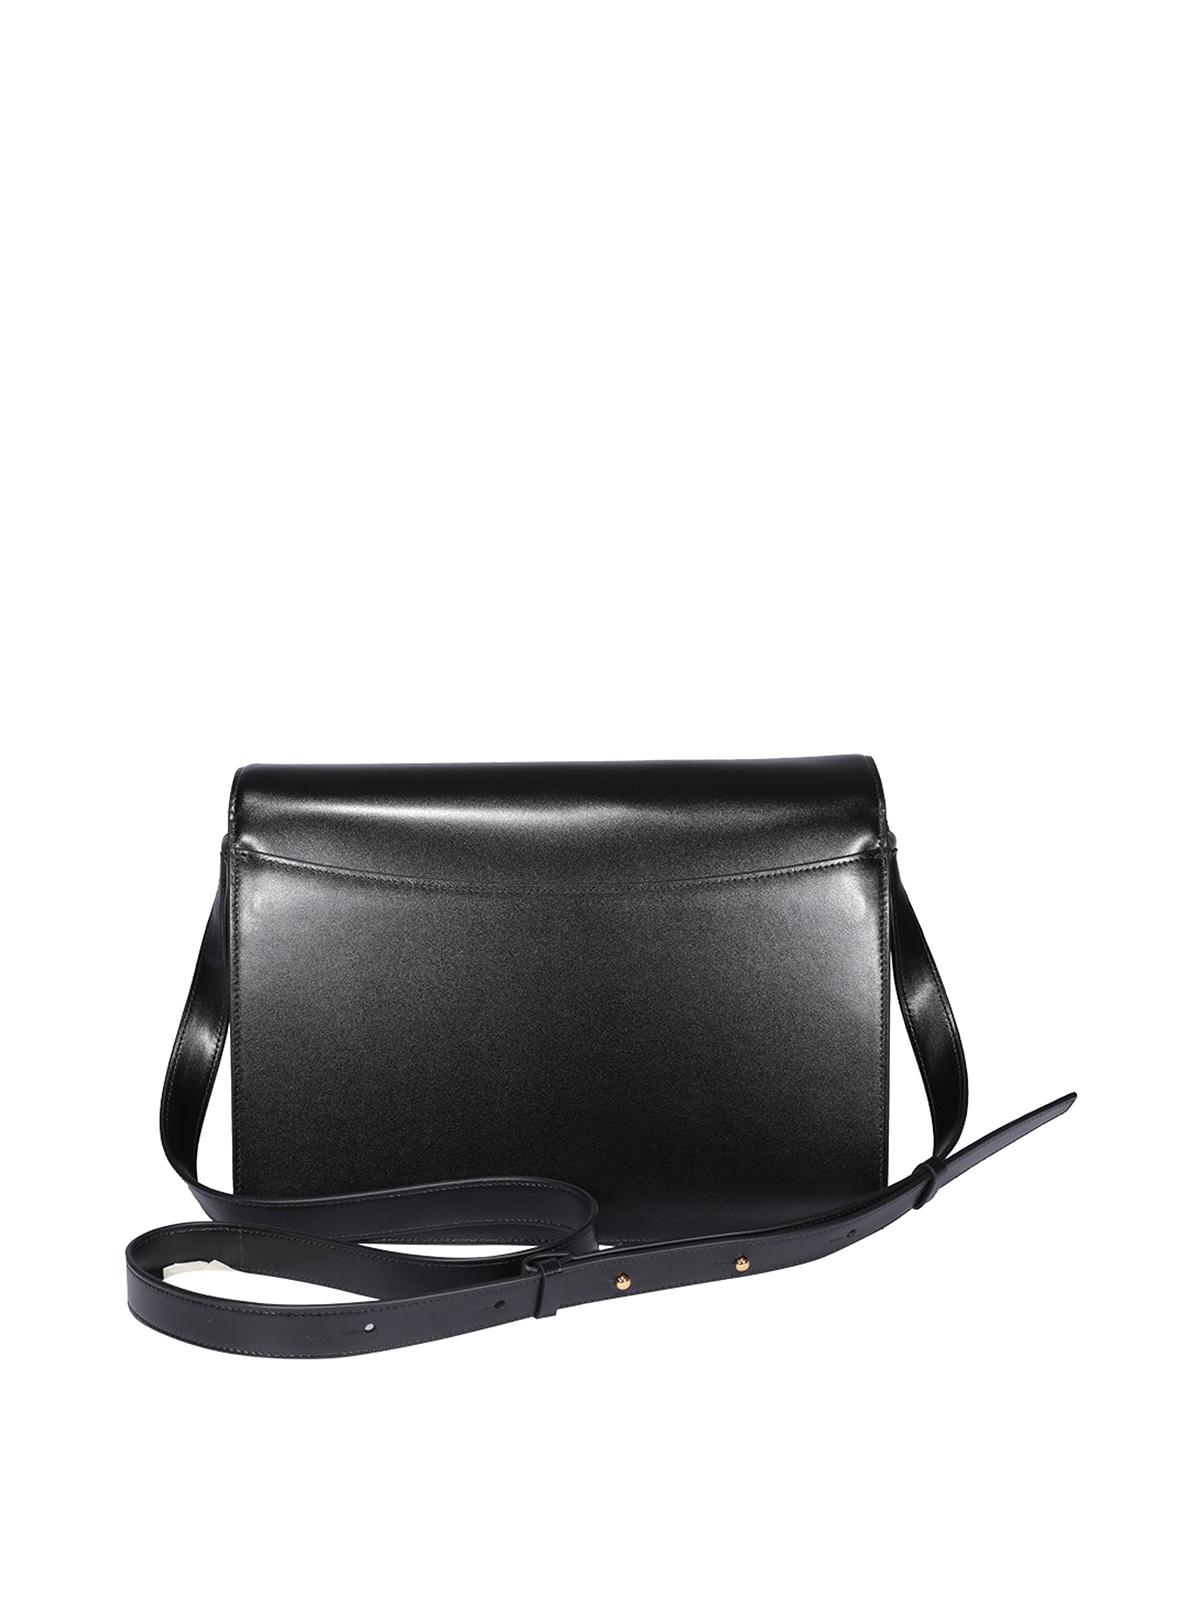 Black Trunk large leather cross-body bag, Marni